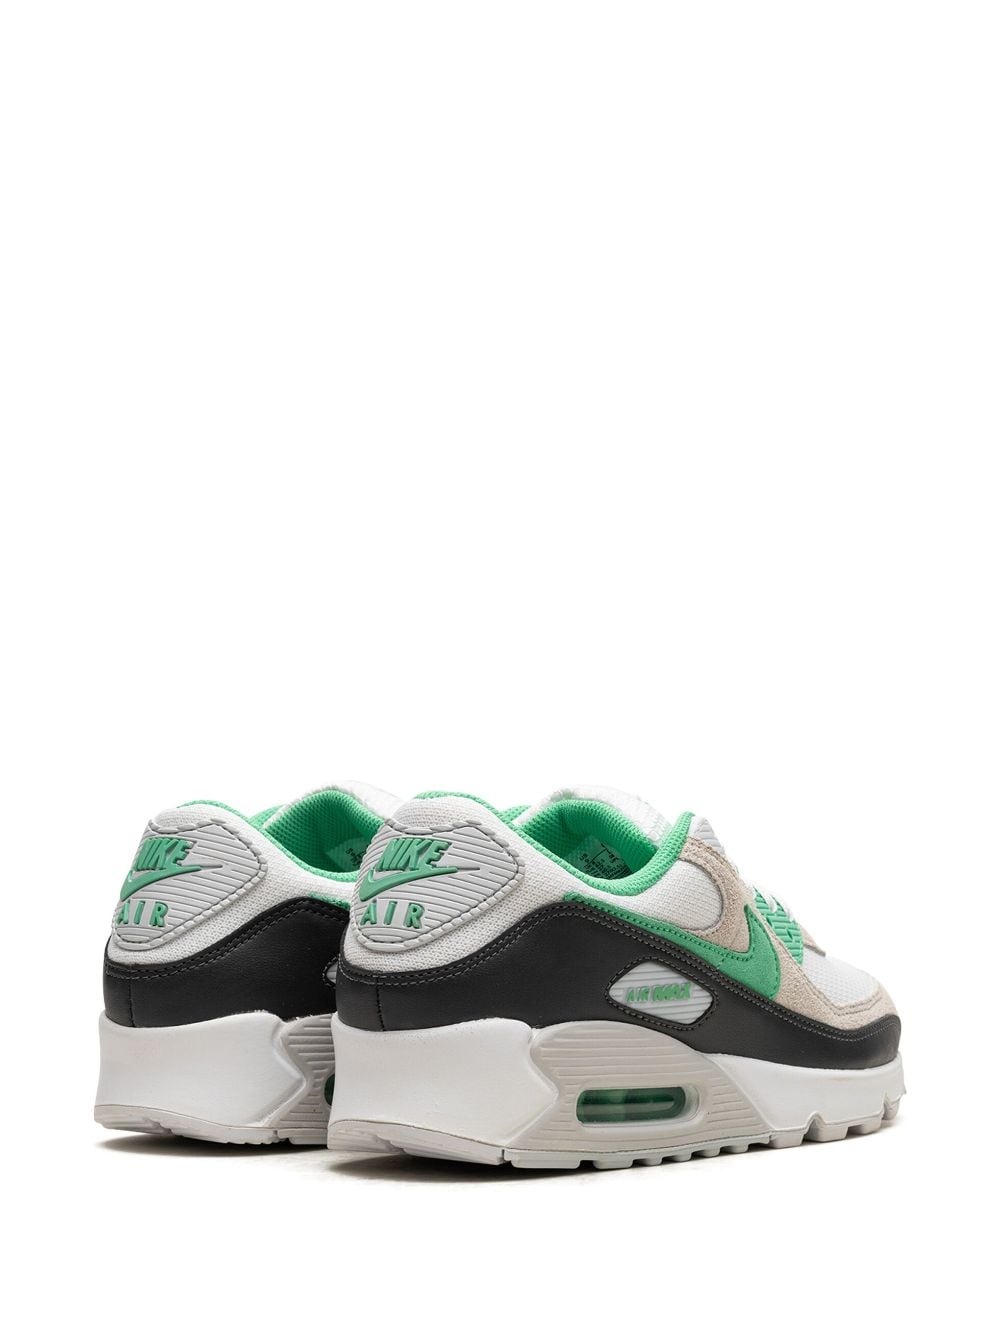 Air Max 90 "Spring Green" sneakers - 3